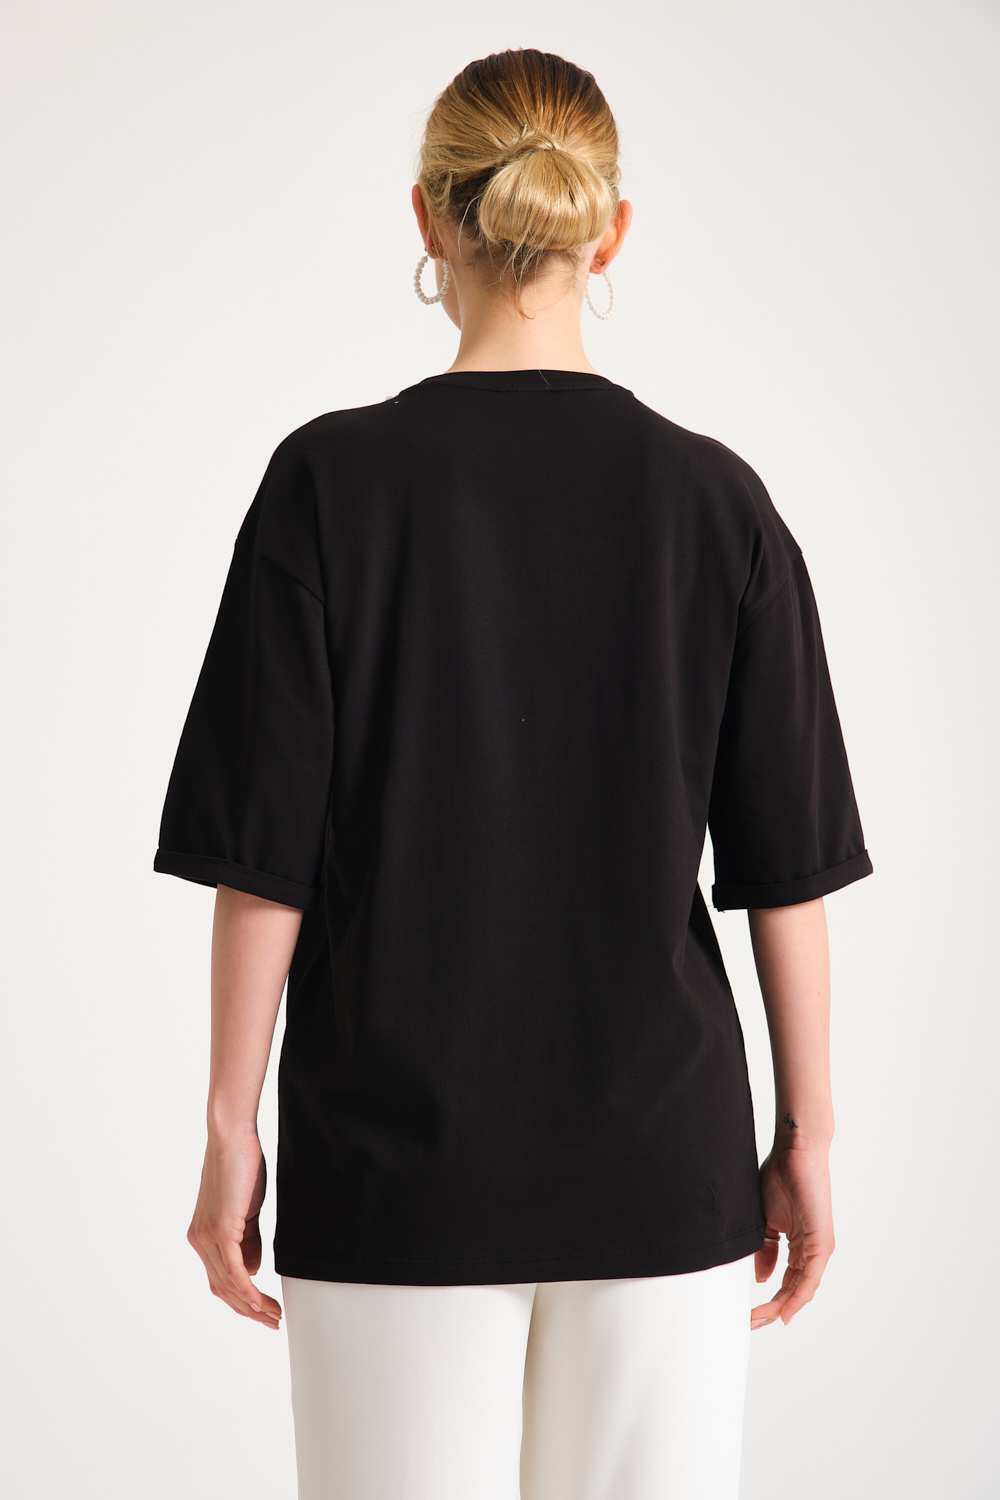 Pearl Detailed Black T-Shirt